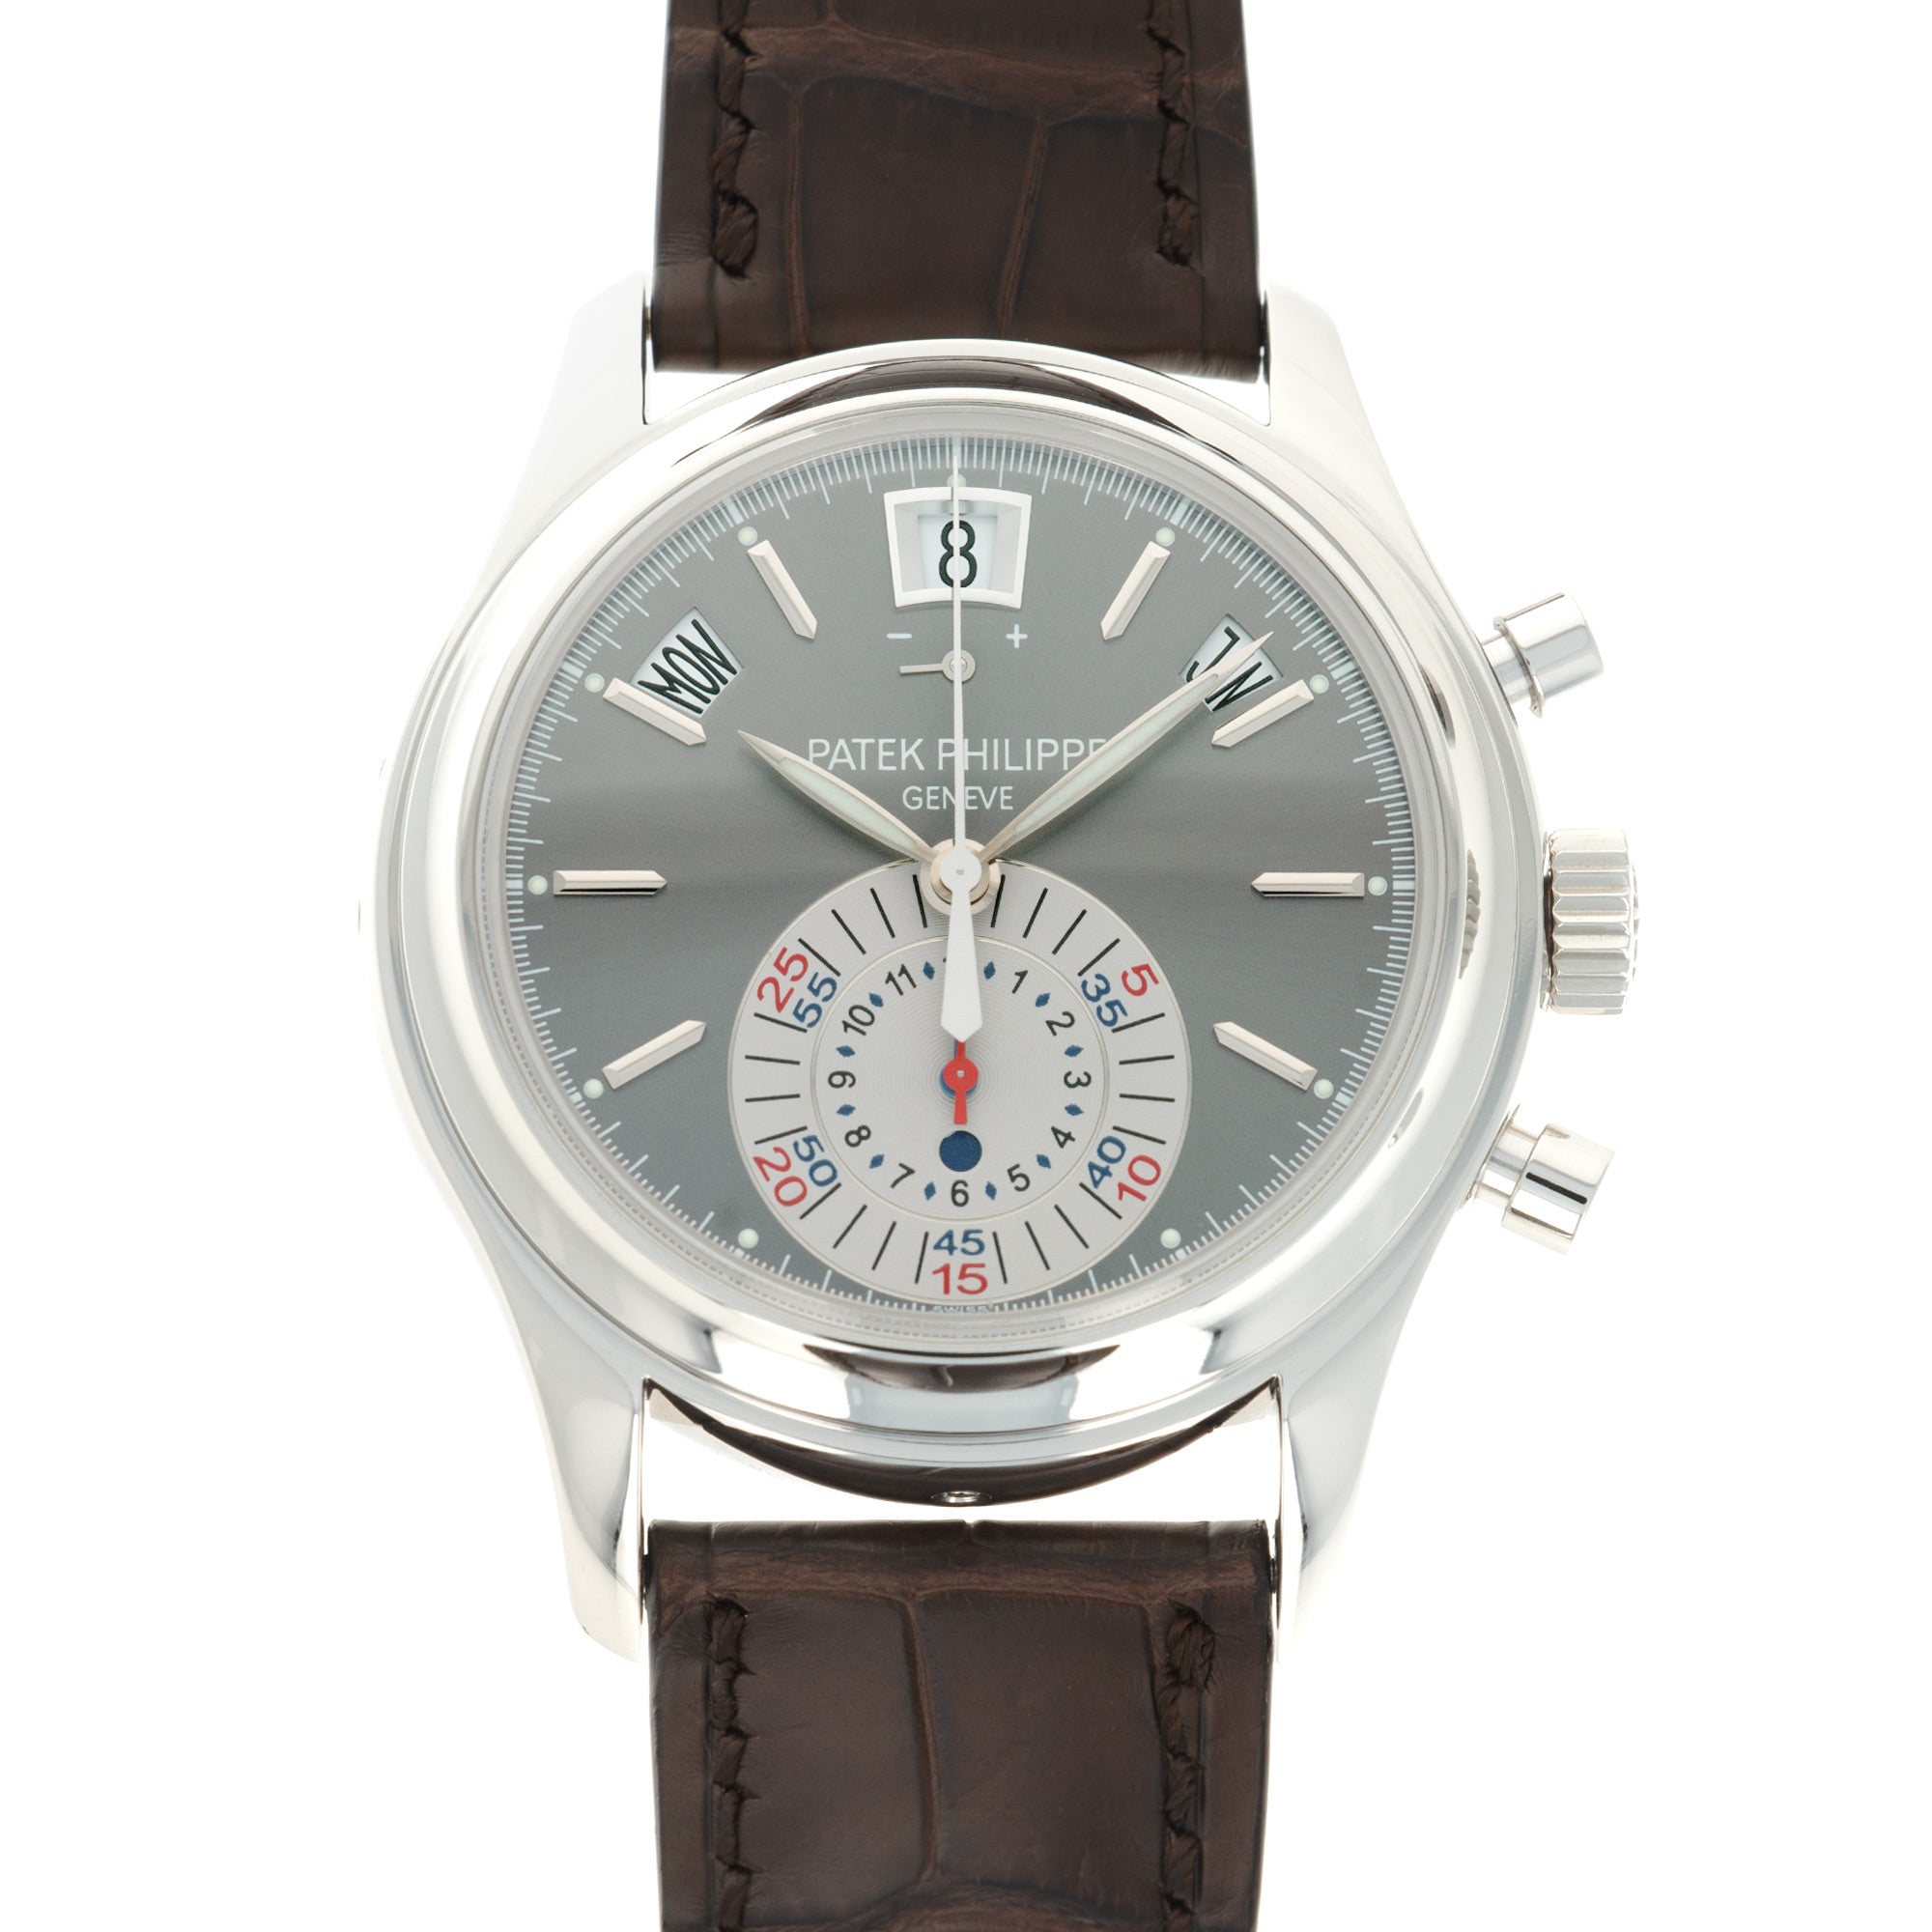 Patek Philippe - Patek Philippe Platinum Annual Calendar Chronograph Watch, Ref. 5960 - The Keystone Watches